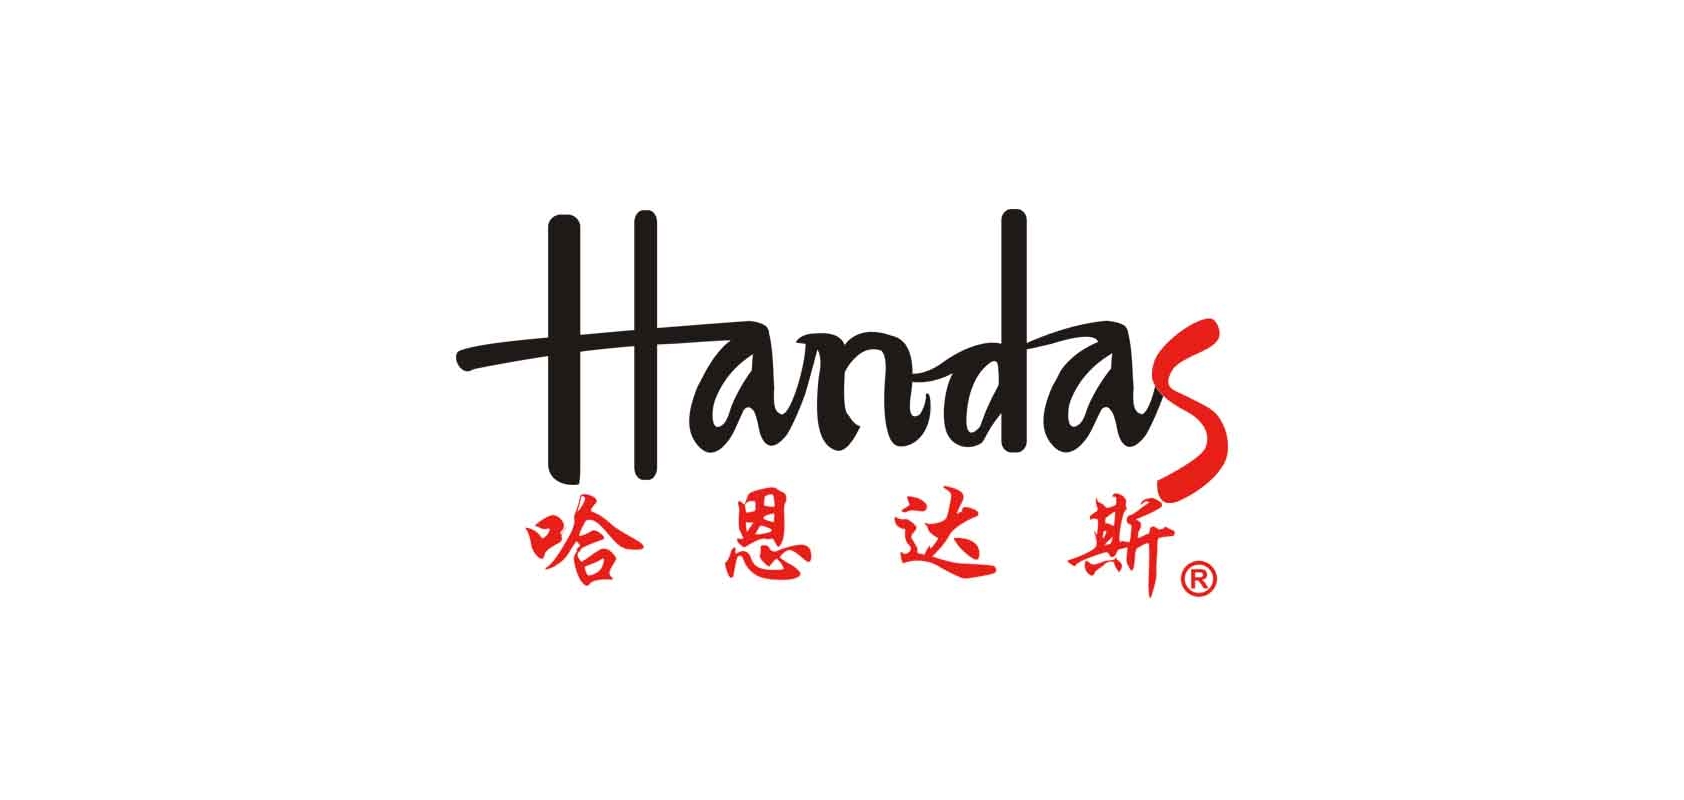 handas是什么牌子_哈恩达斯品牌怎么样?